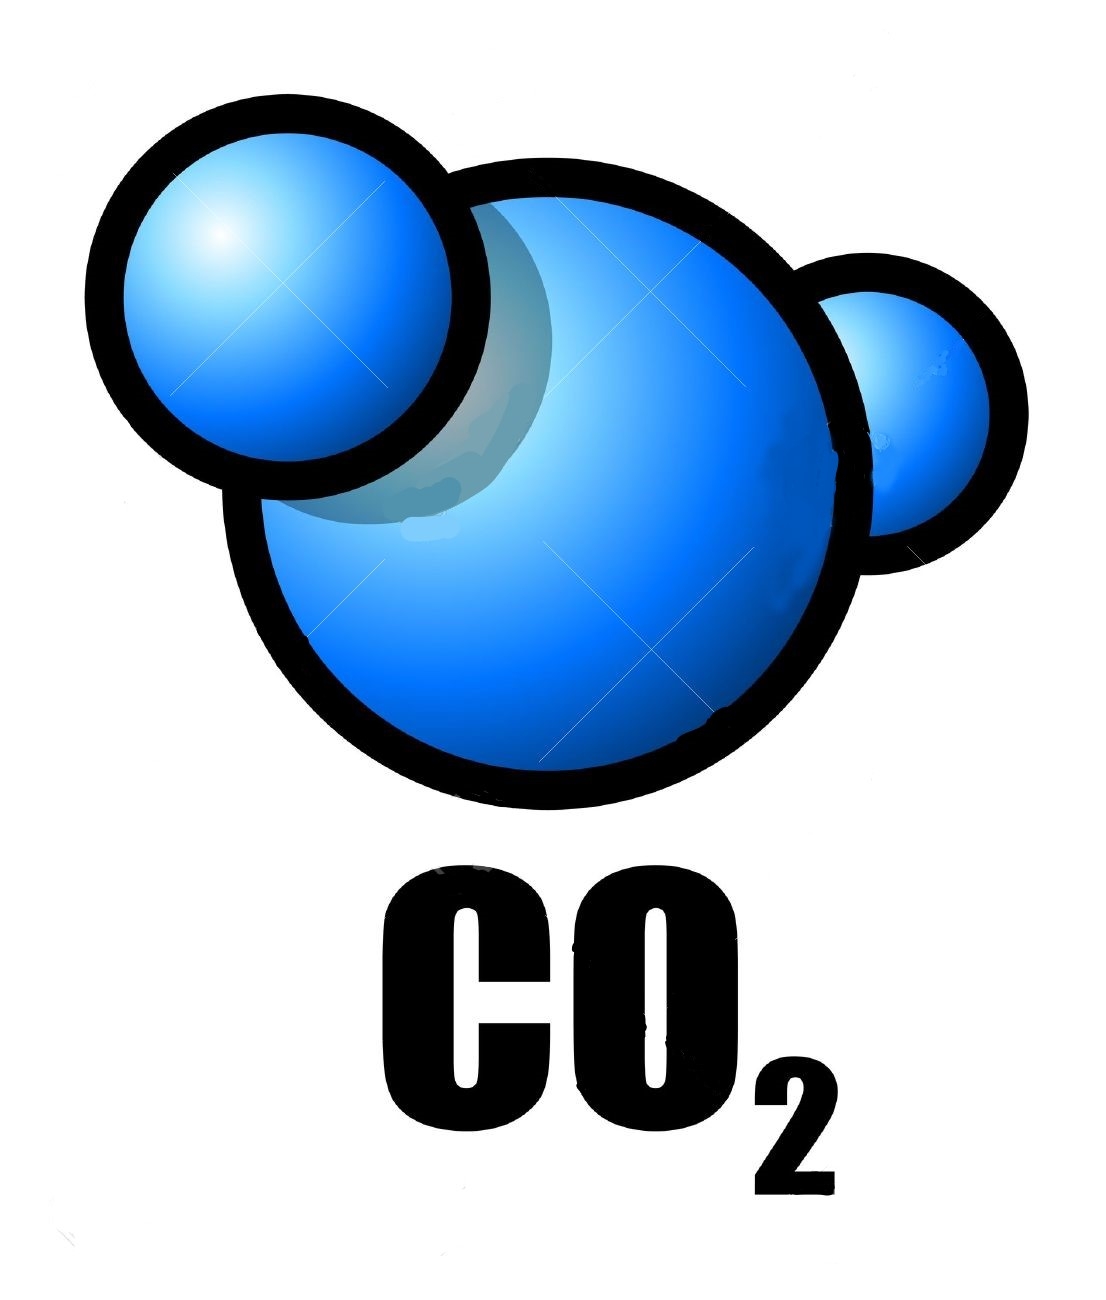 CO2 Anidride Carbonica